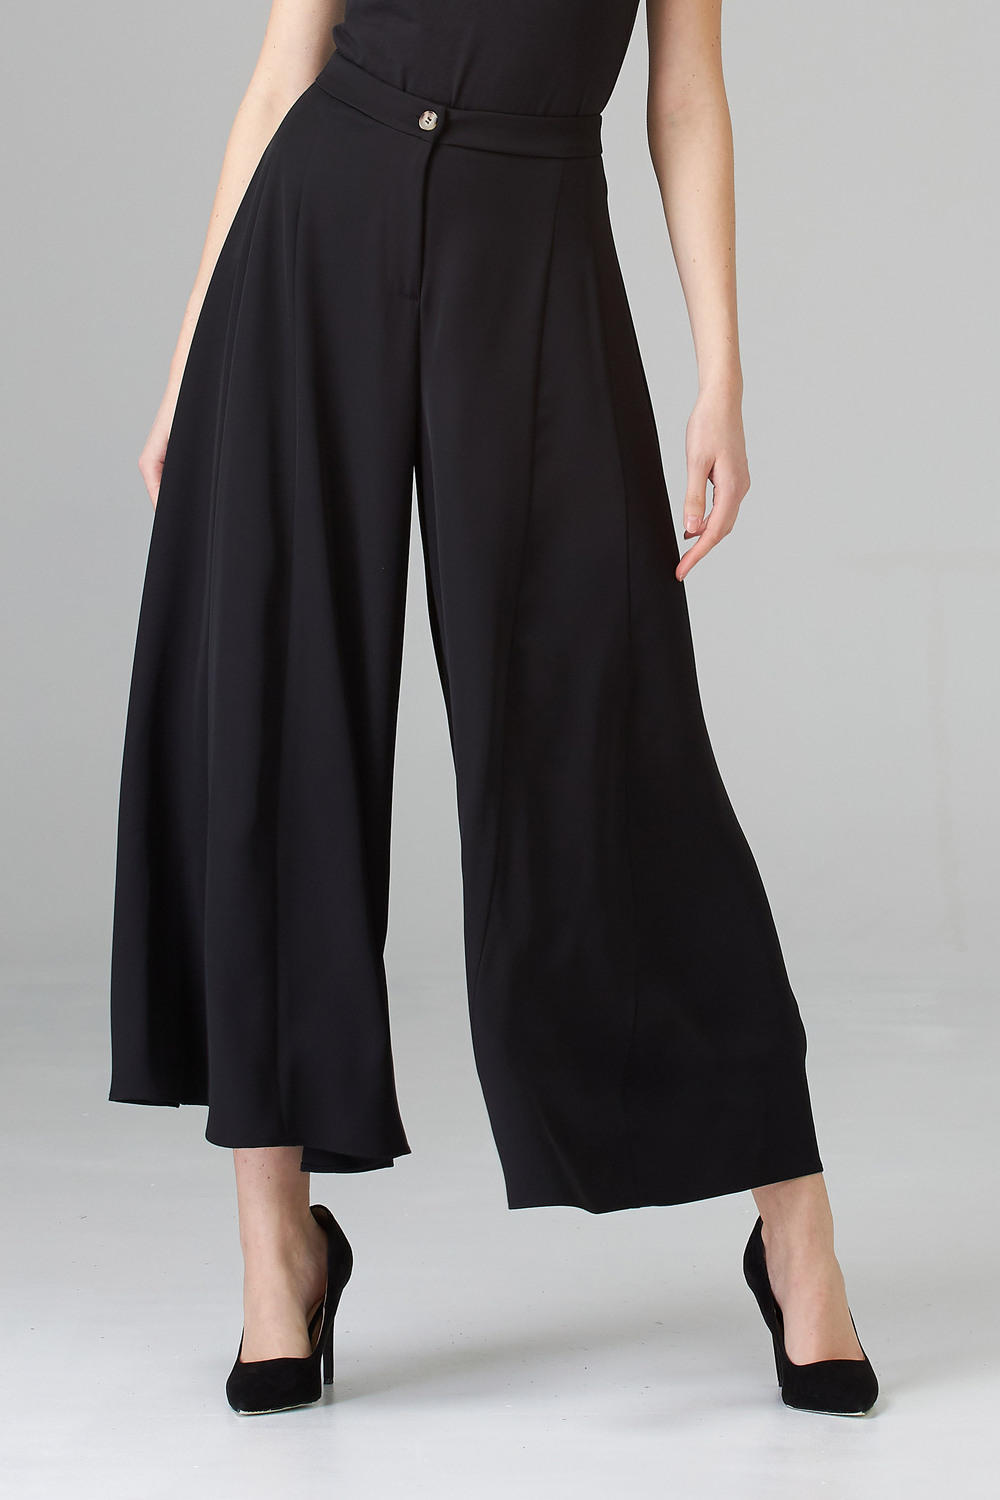 Joseph Ribkoff pantalon style 201424. Noir